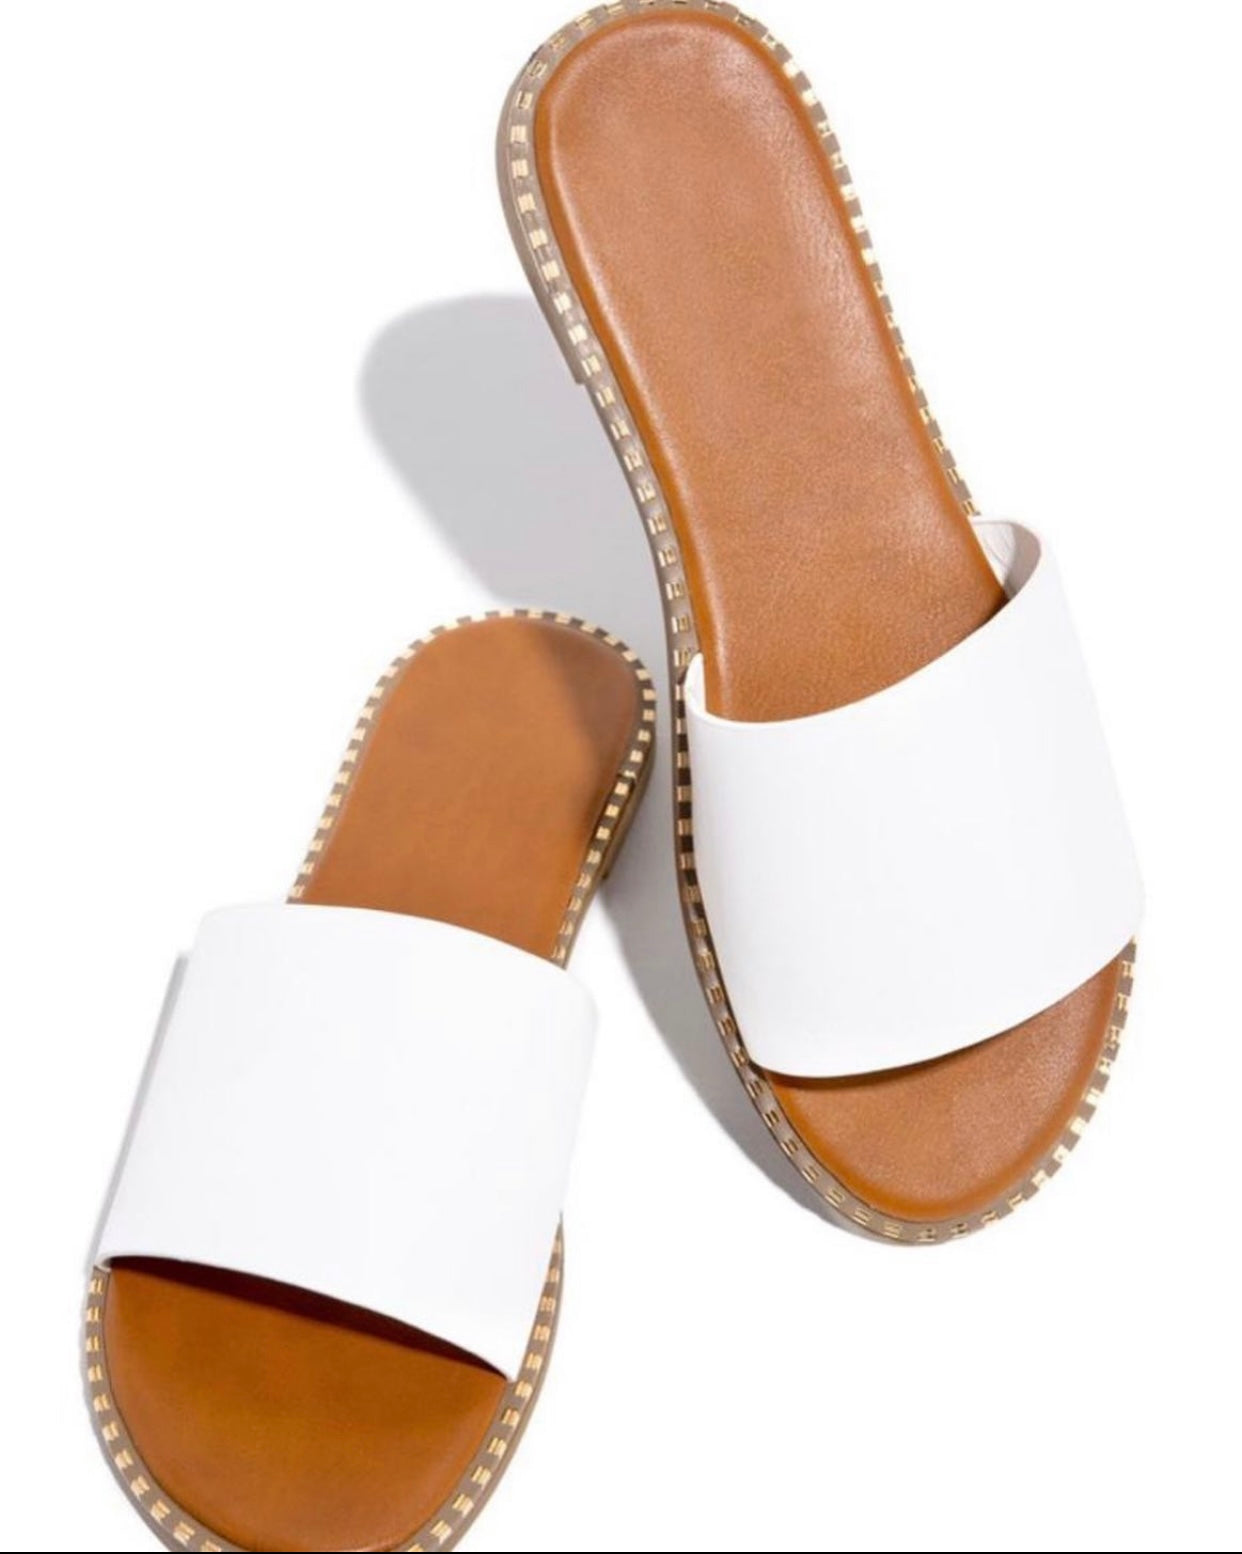 “Chantal” white sandals